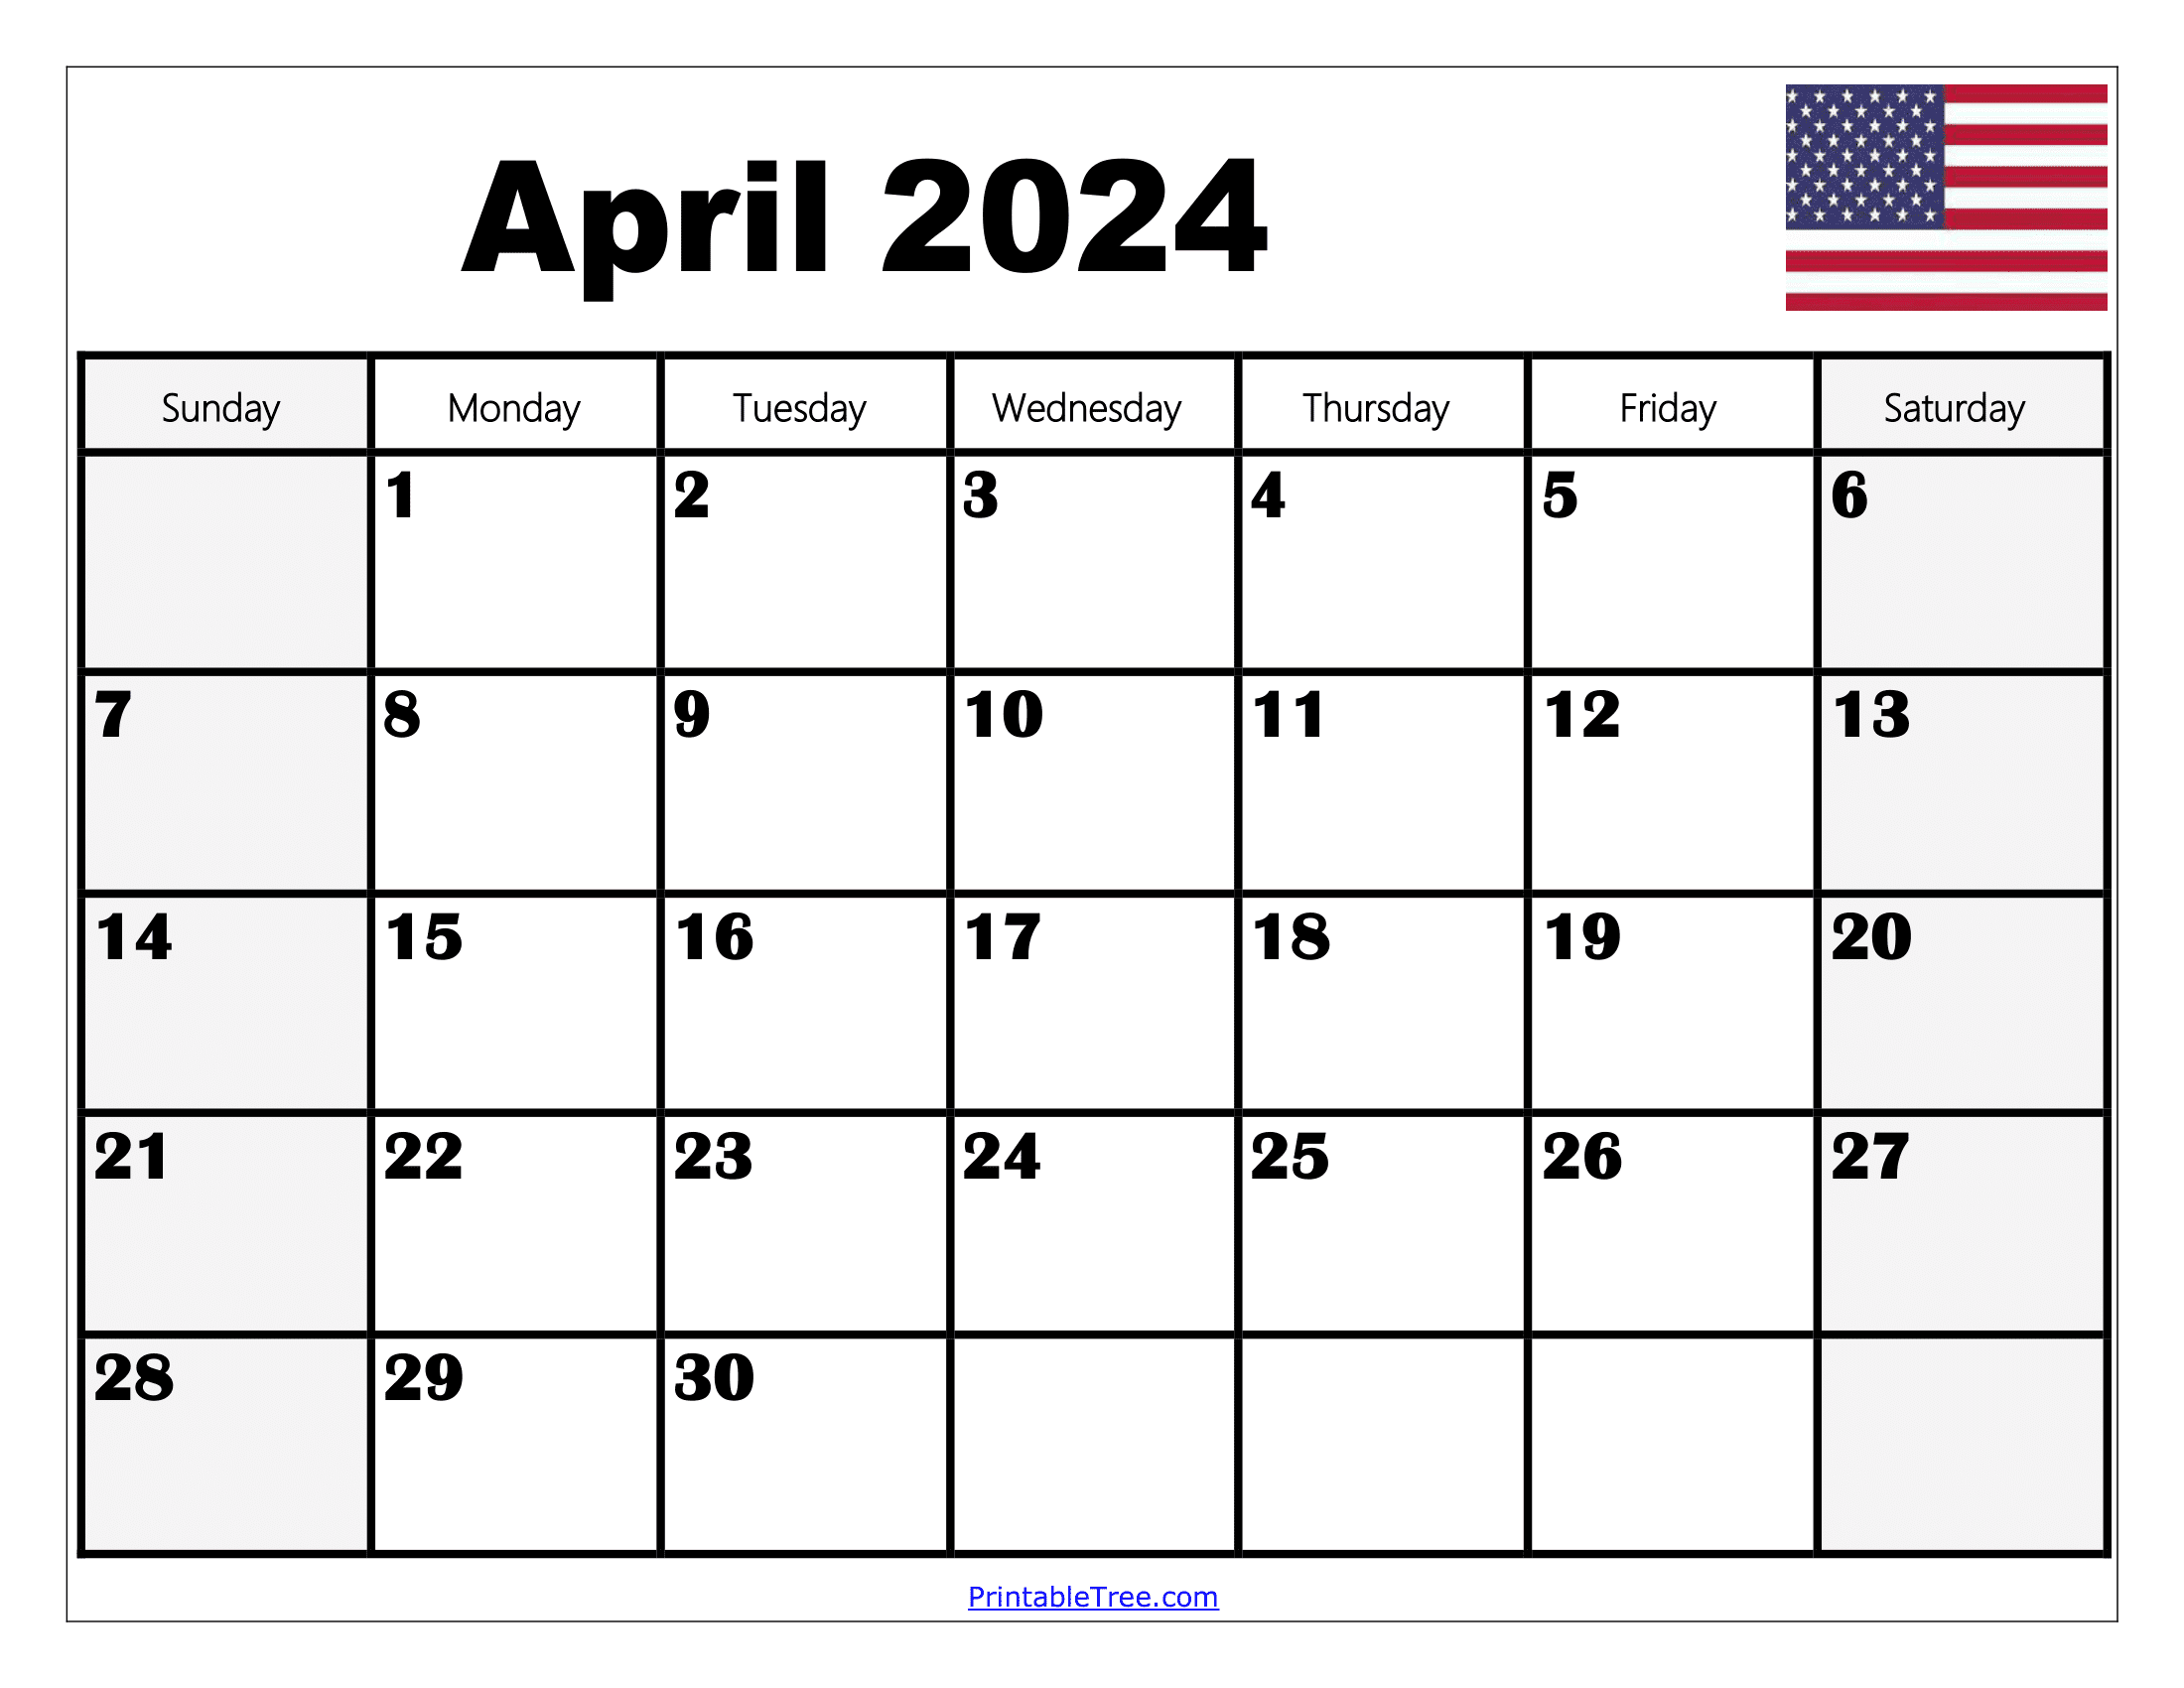 Blank April 2024 Calendar Printable Pdf Template With Holidays for Calendar 2024 Printable Free April